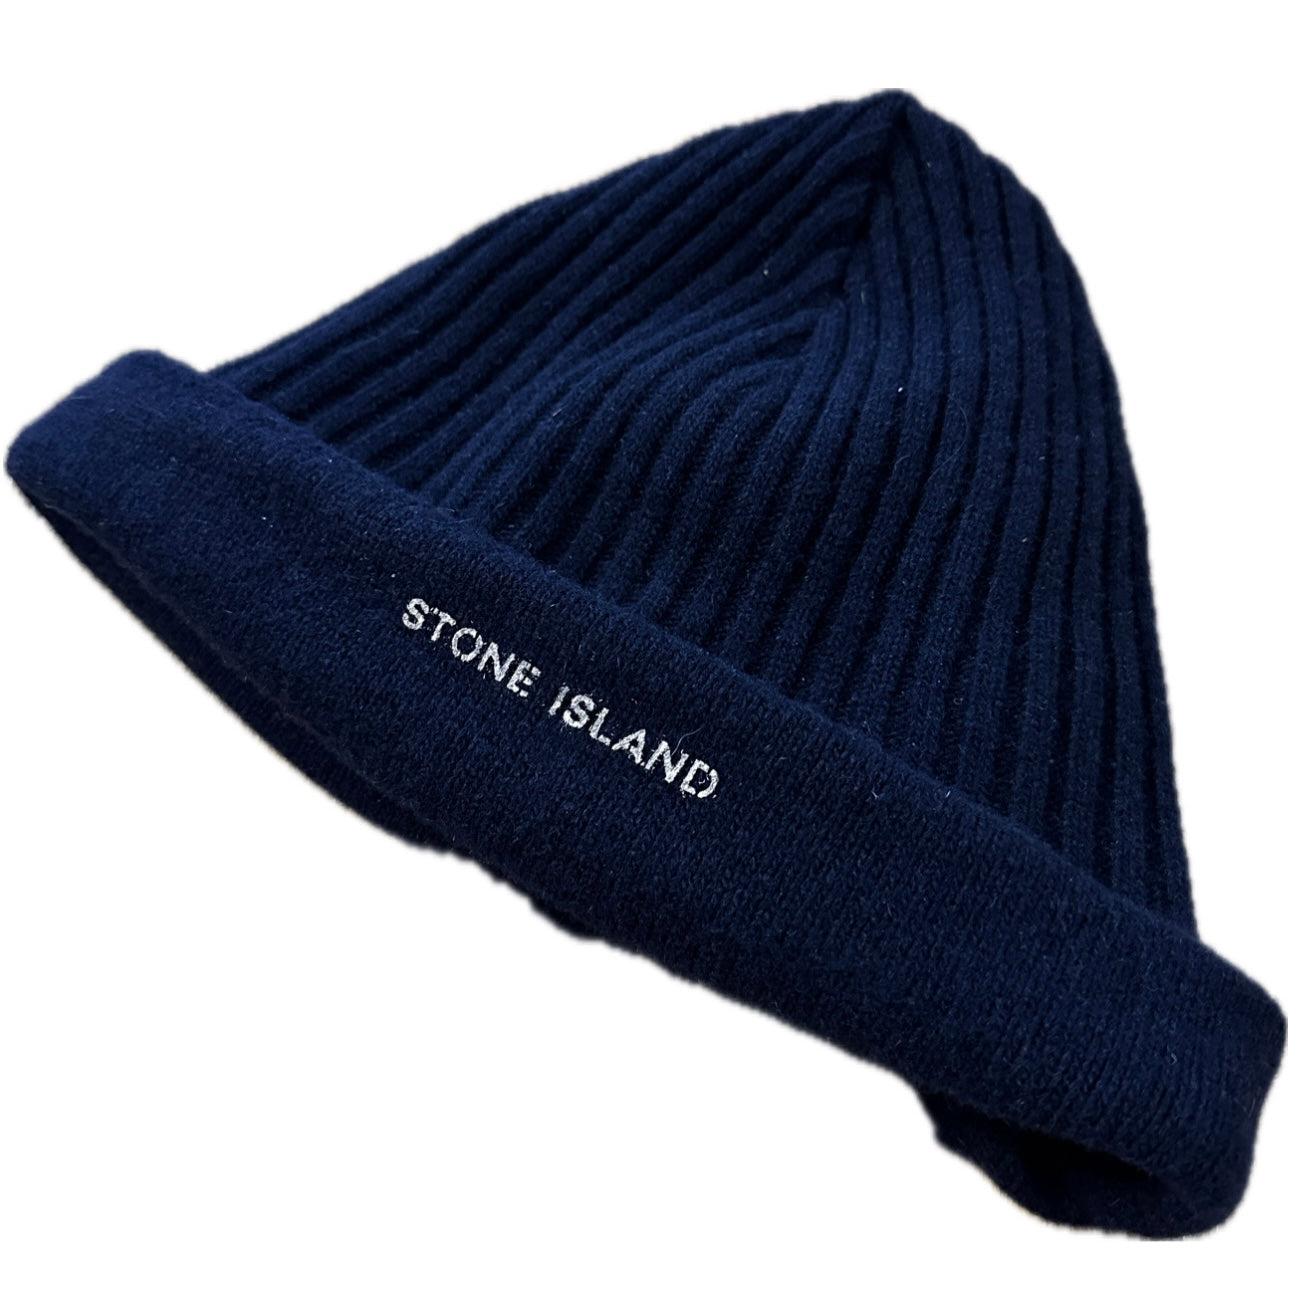 Stone Island Reversible Knit Hat Navy - One Size